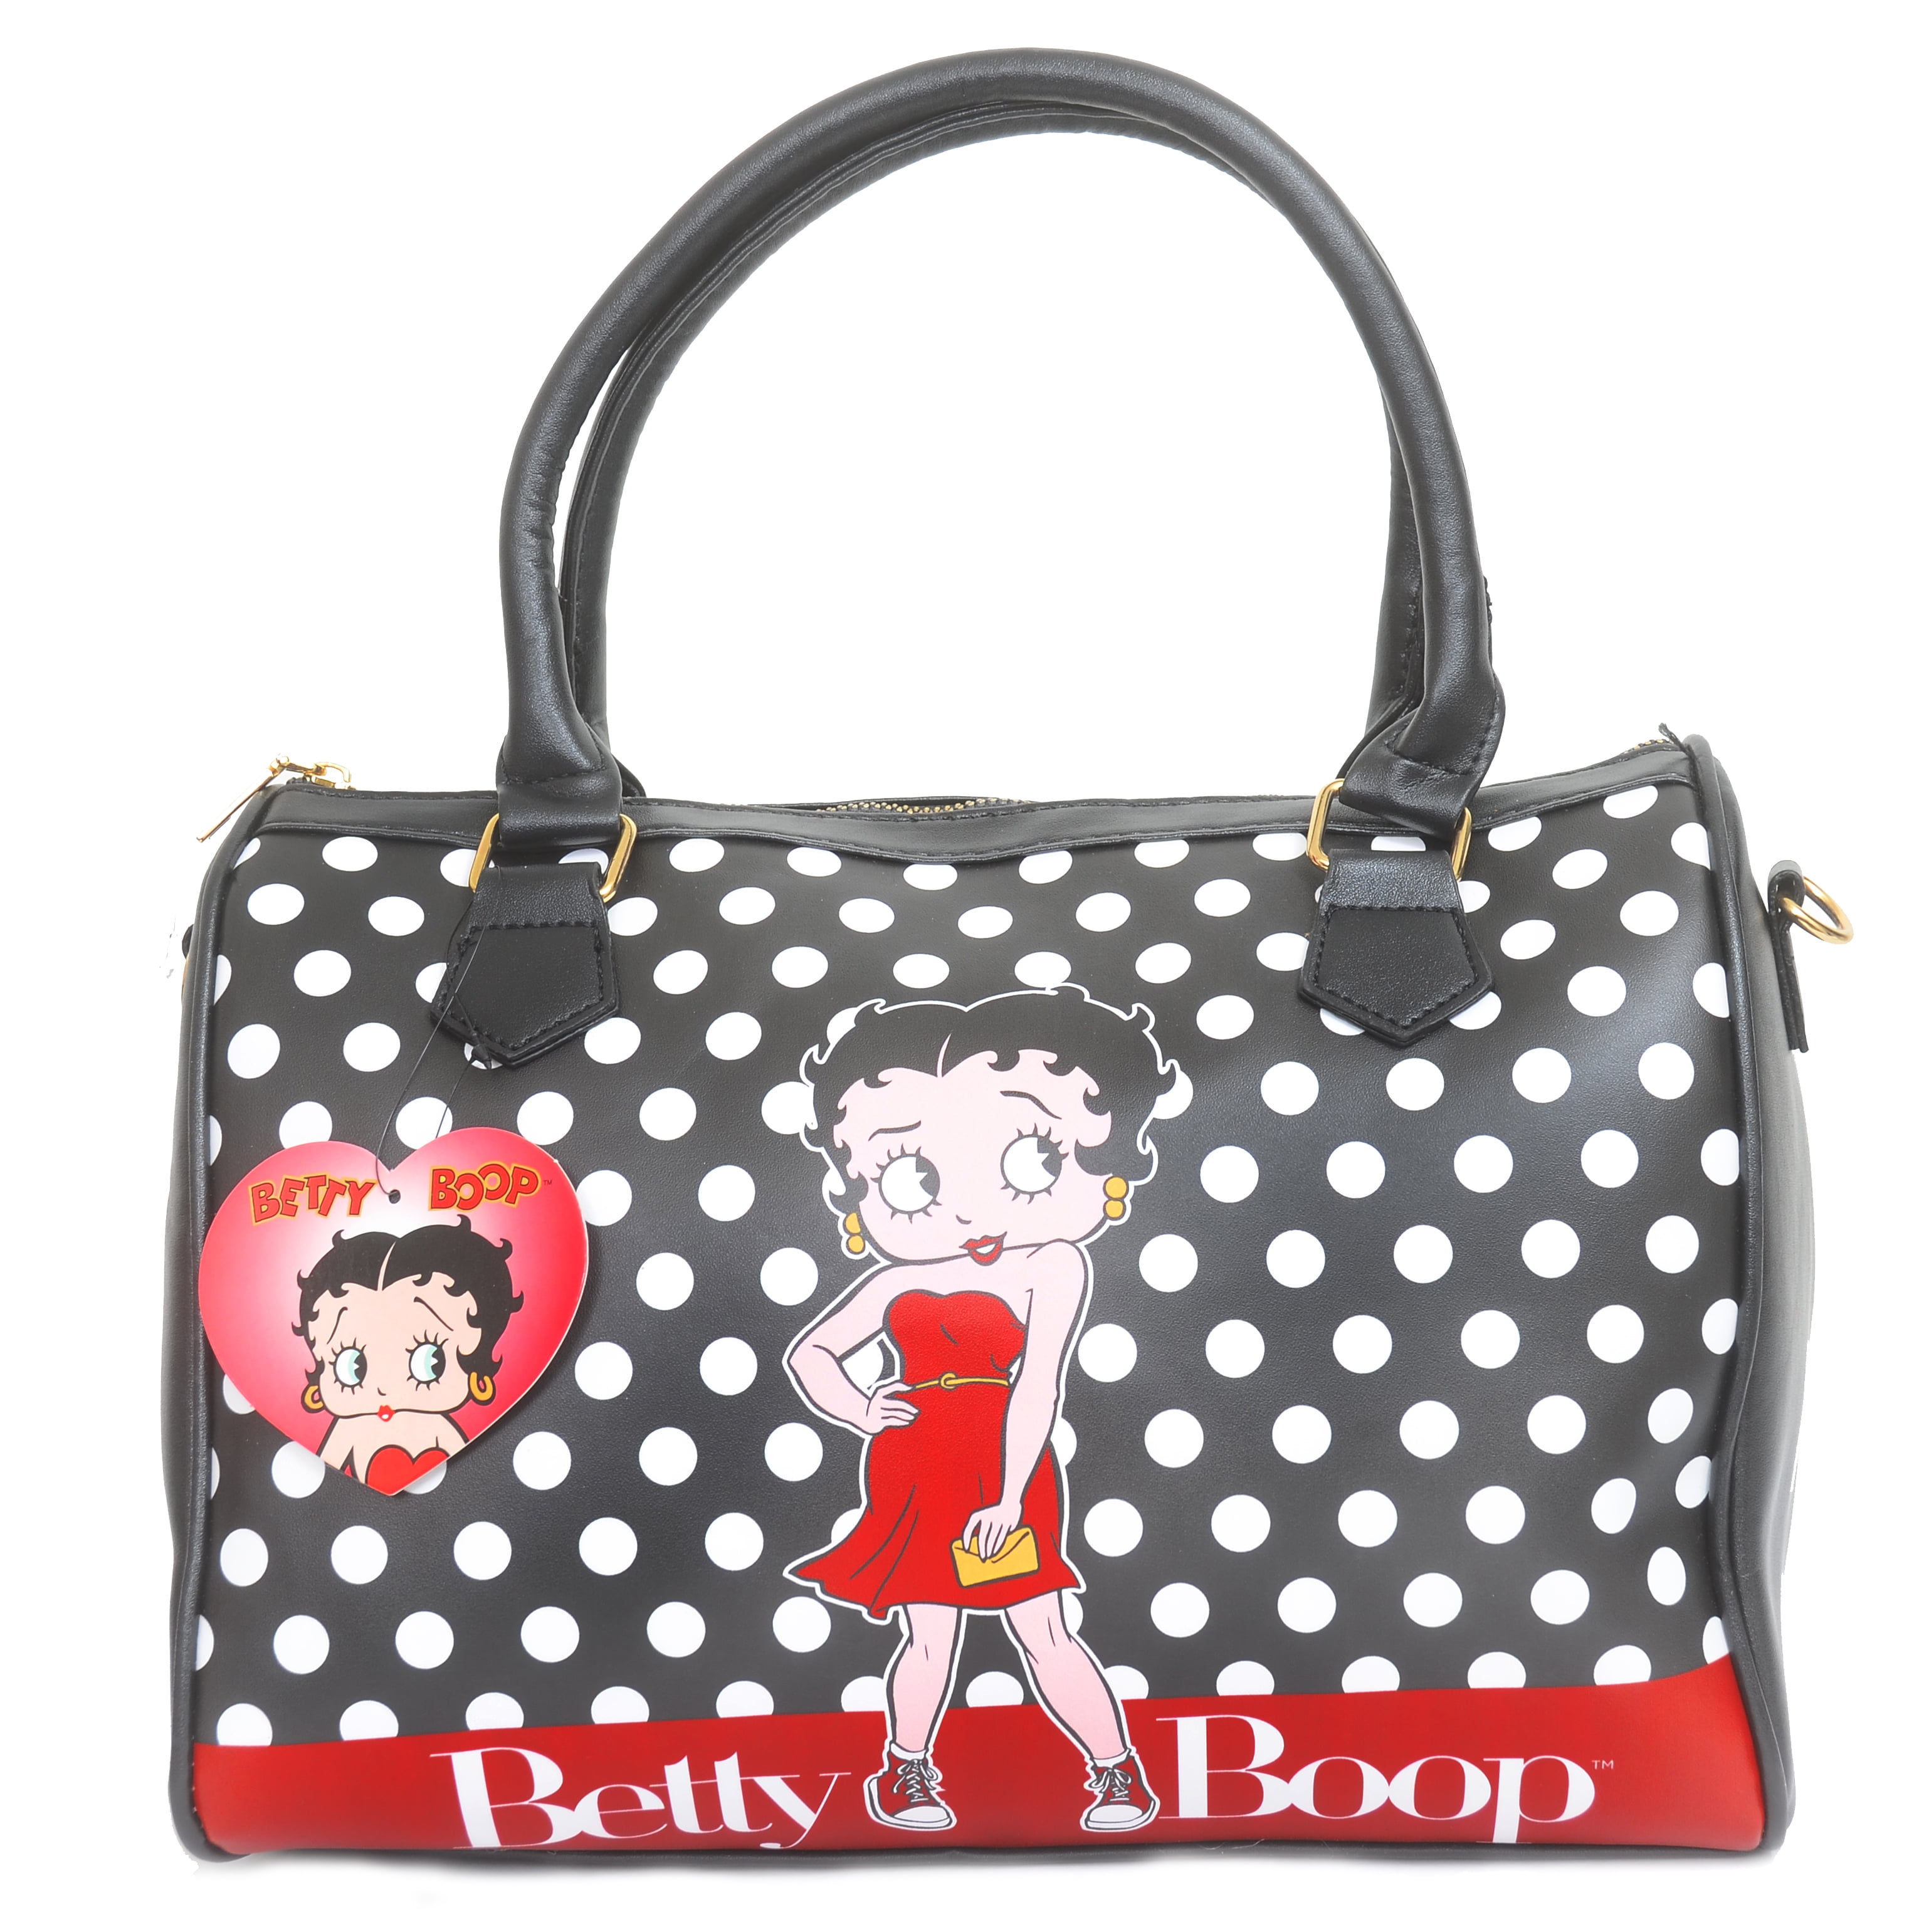 Betty boop|Betty boop purse|betty boop black purse|purse|showgirl betty boop flat purse|betty boop bag|comics|